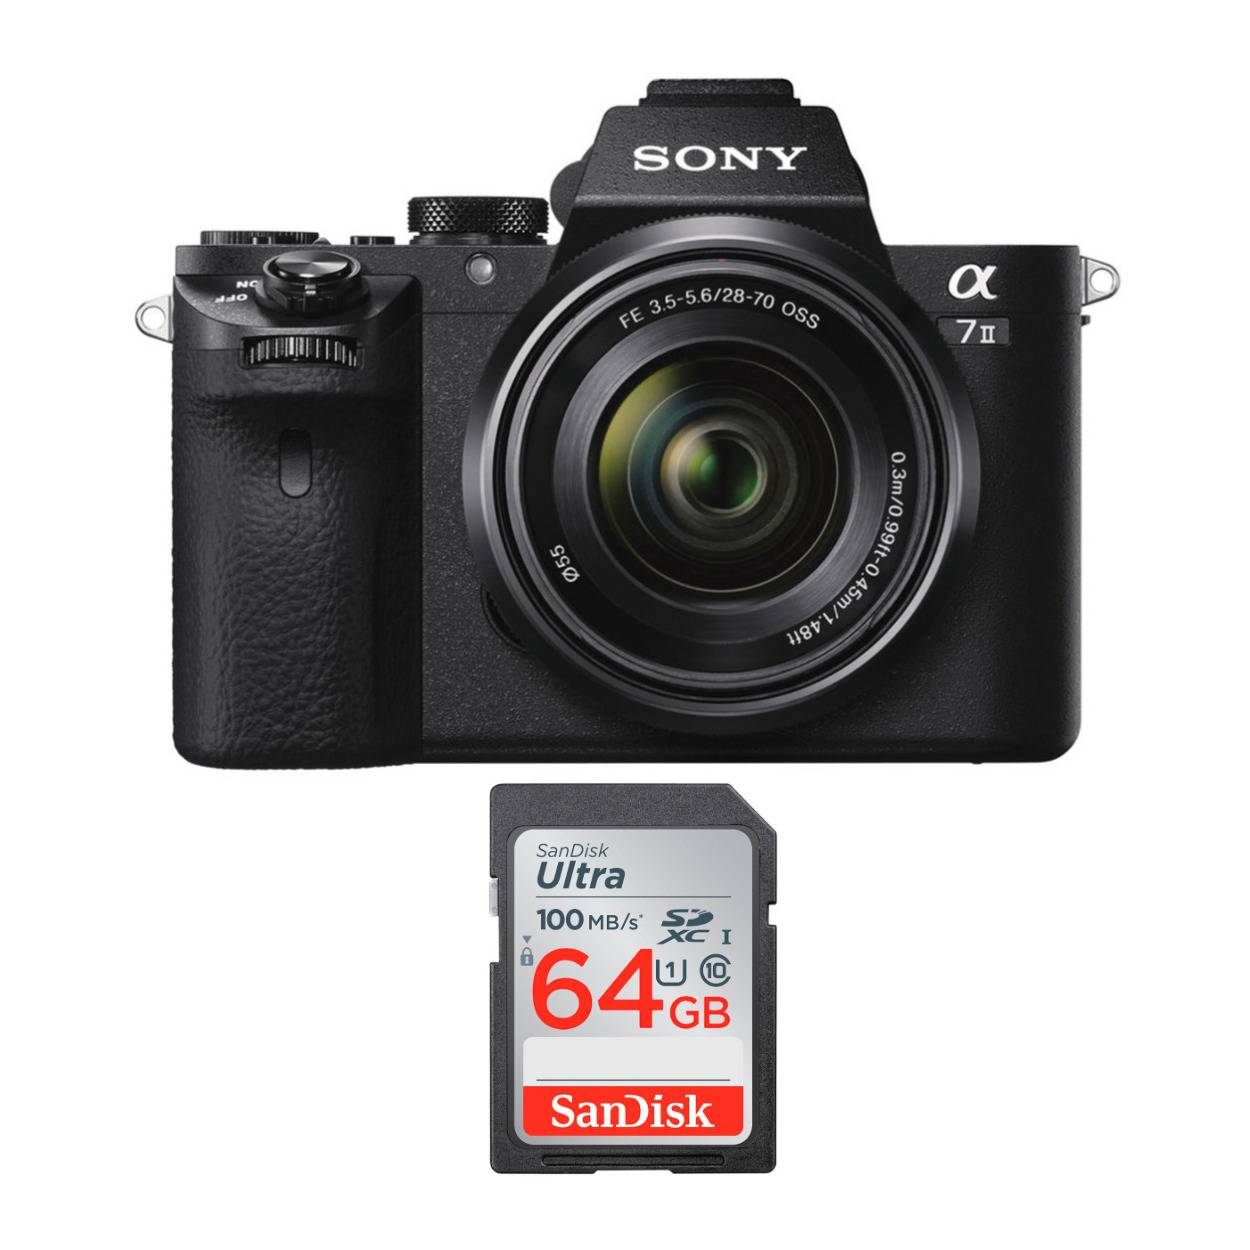 Sony Alpha a7II Mirrorless Digital Camera with 28-70mm f/3.5-5.6 Lens and 64GB SD Card Bundle